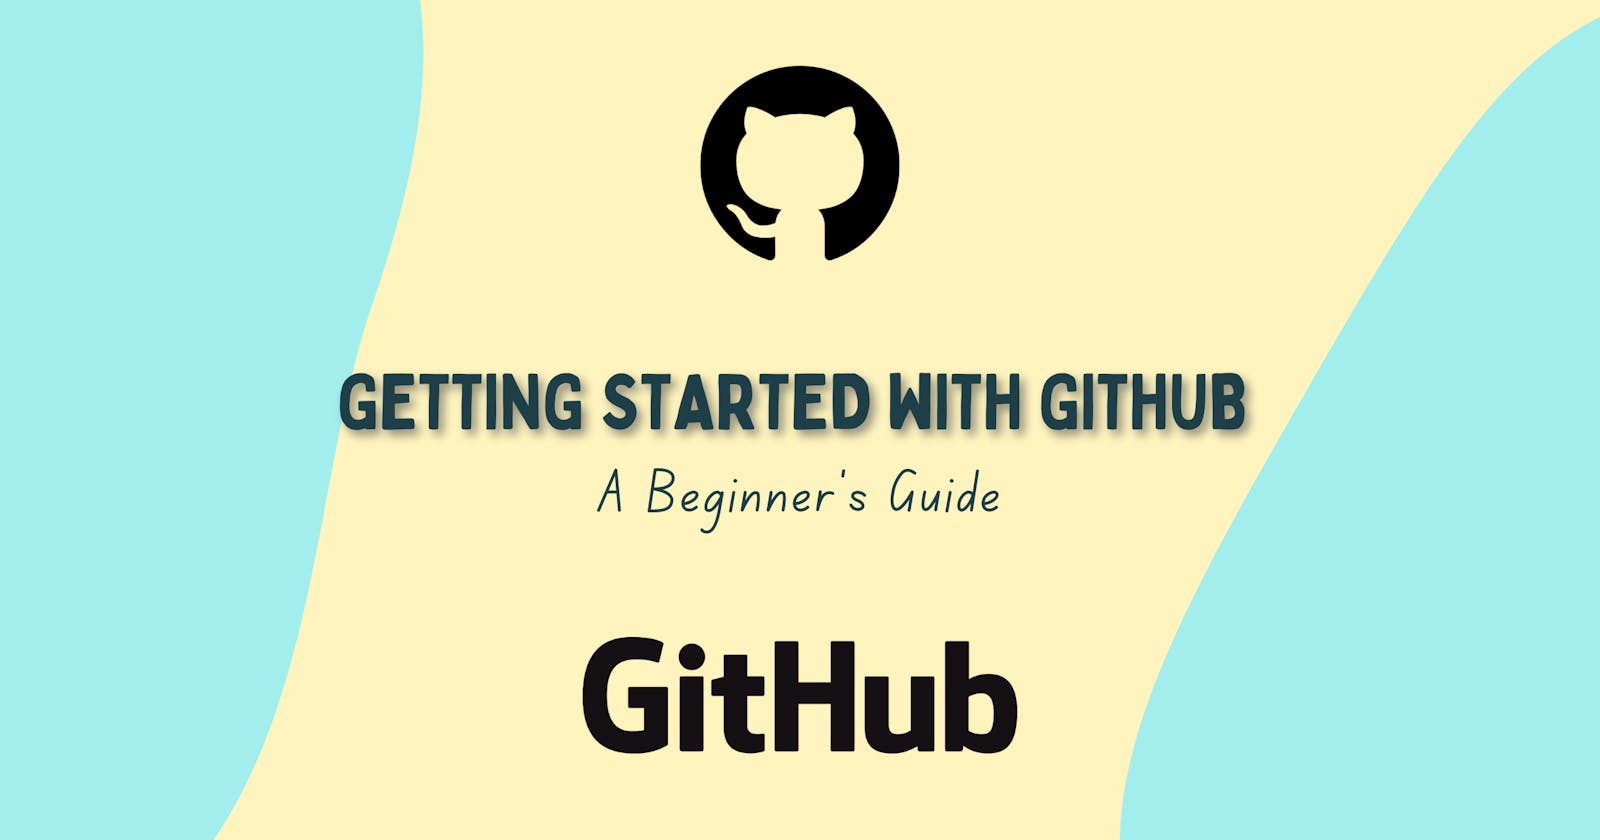 A Beginner's Guide to Uploading Code to GitHub